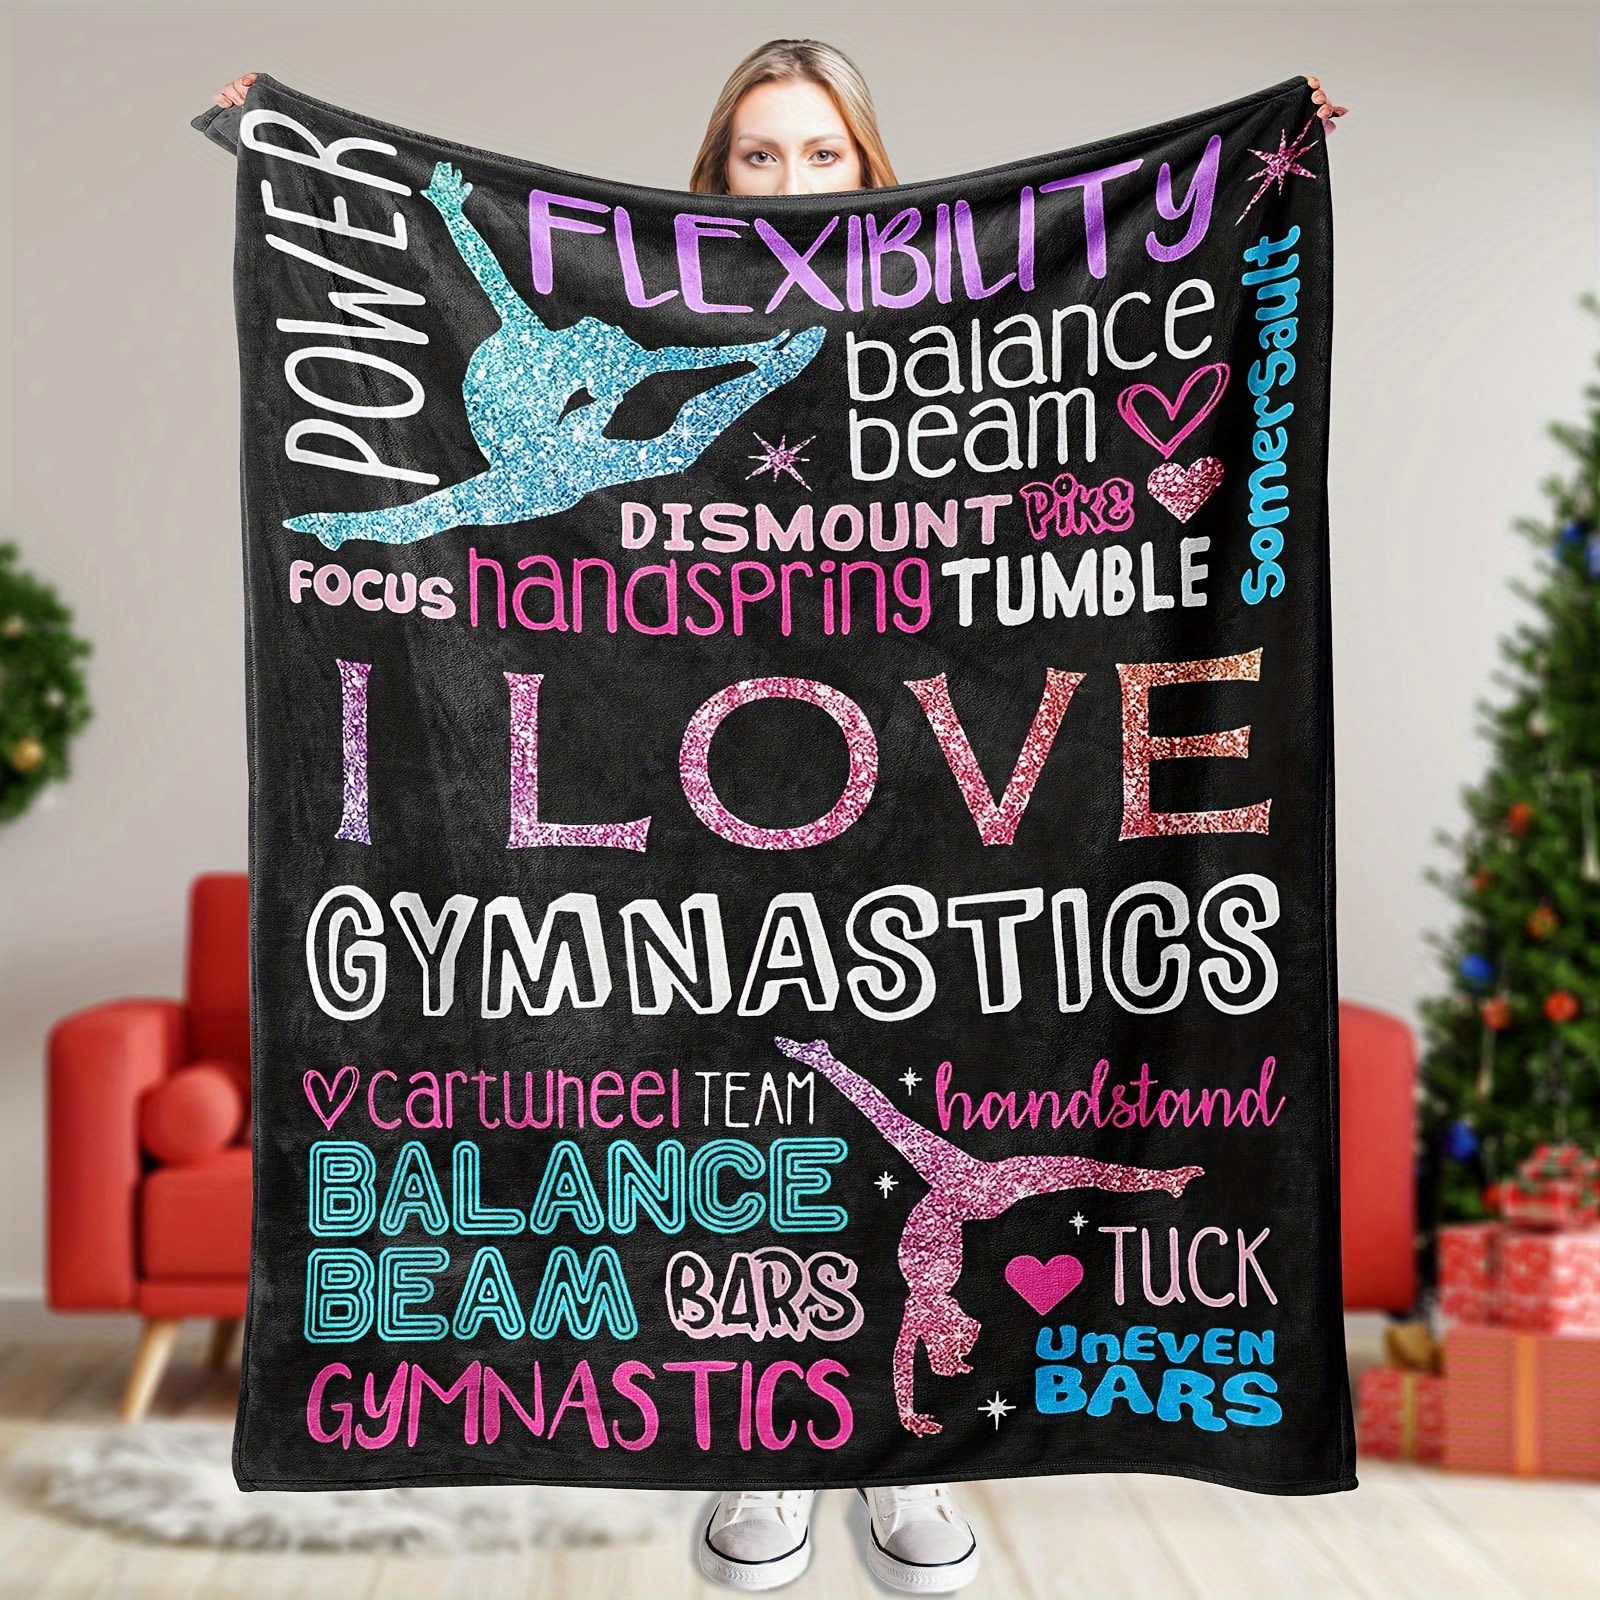  Gymnastics Gifts for Girls, Girls Gymnastics Gifts Blanket  60x50, Gifts for Gymnastics Girls Kids Teens Gymnast Lovers, Gymnastics  Gift Ideas for Birthday Christmas, Gymnast Gift Throw Blankets : Home &  Kitchen